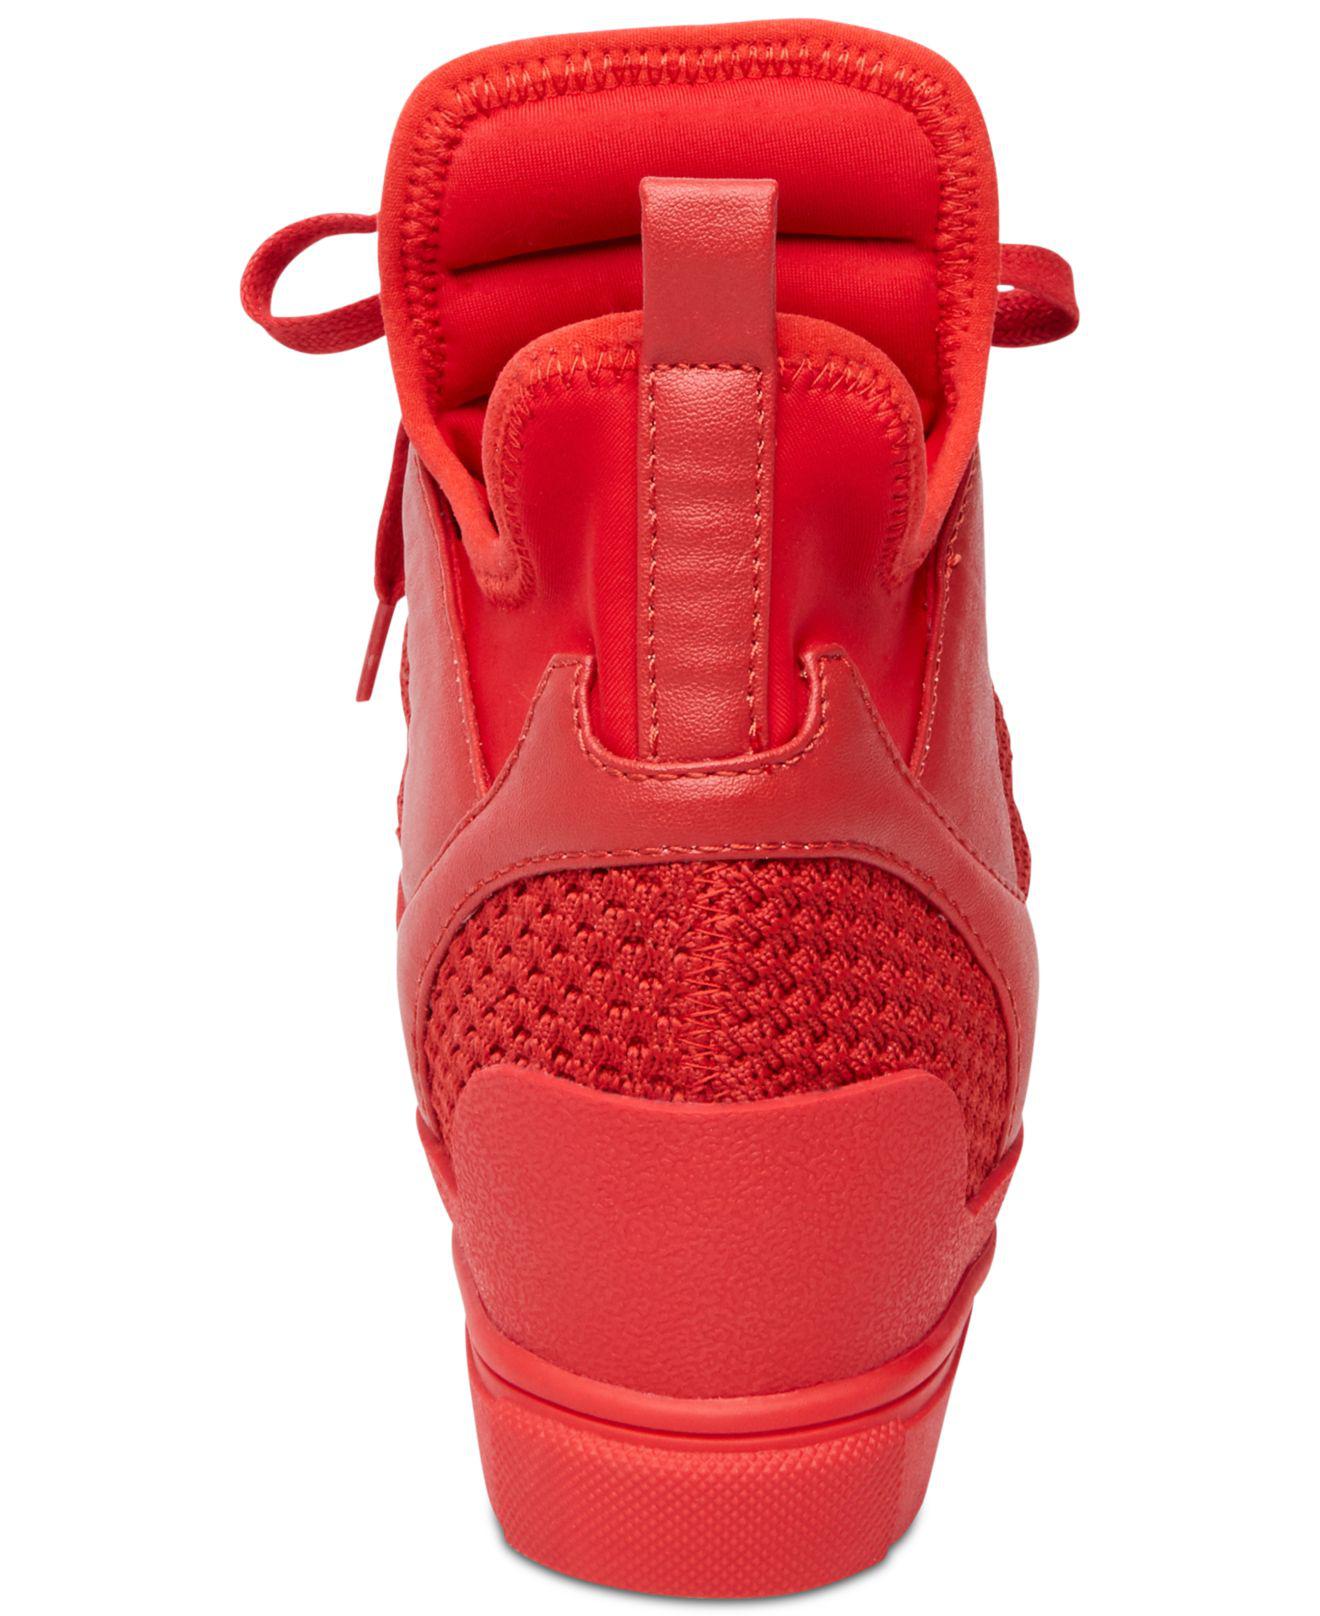 womens red wedge sneakers